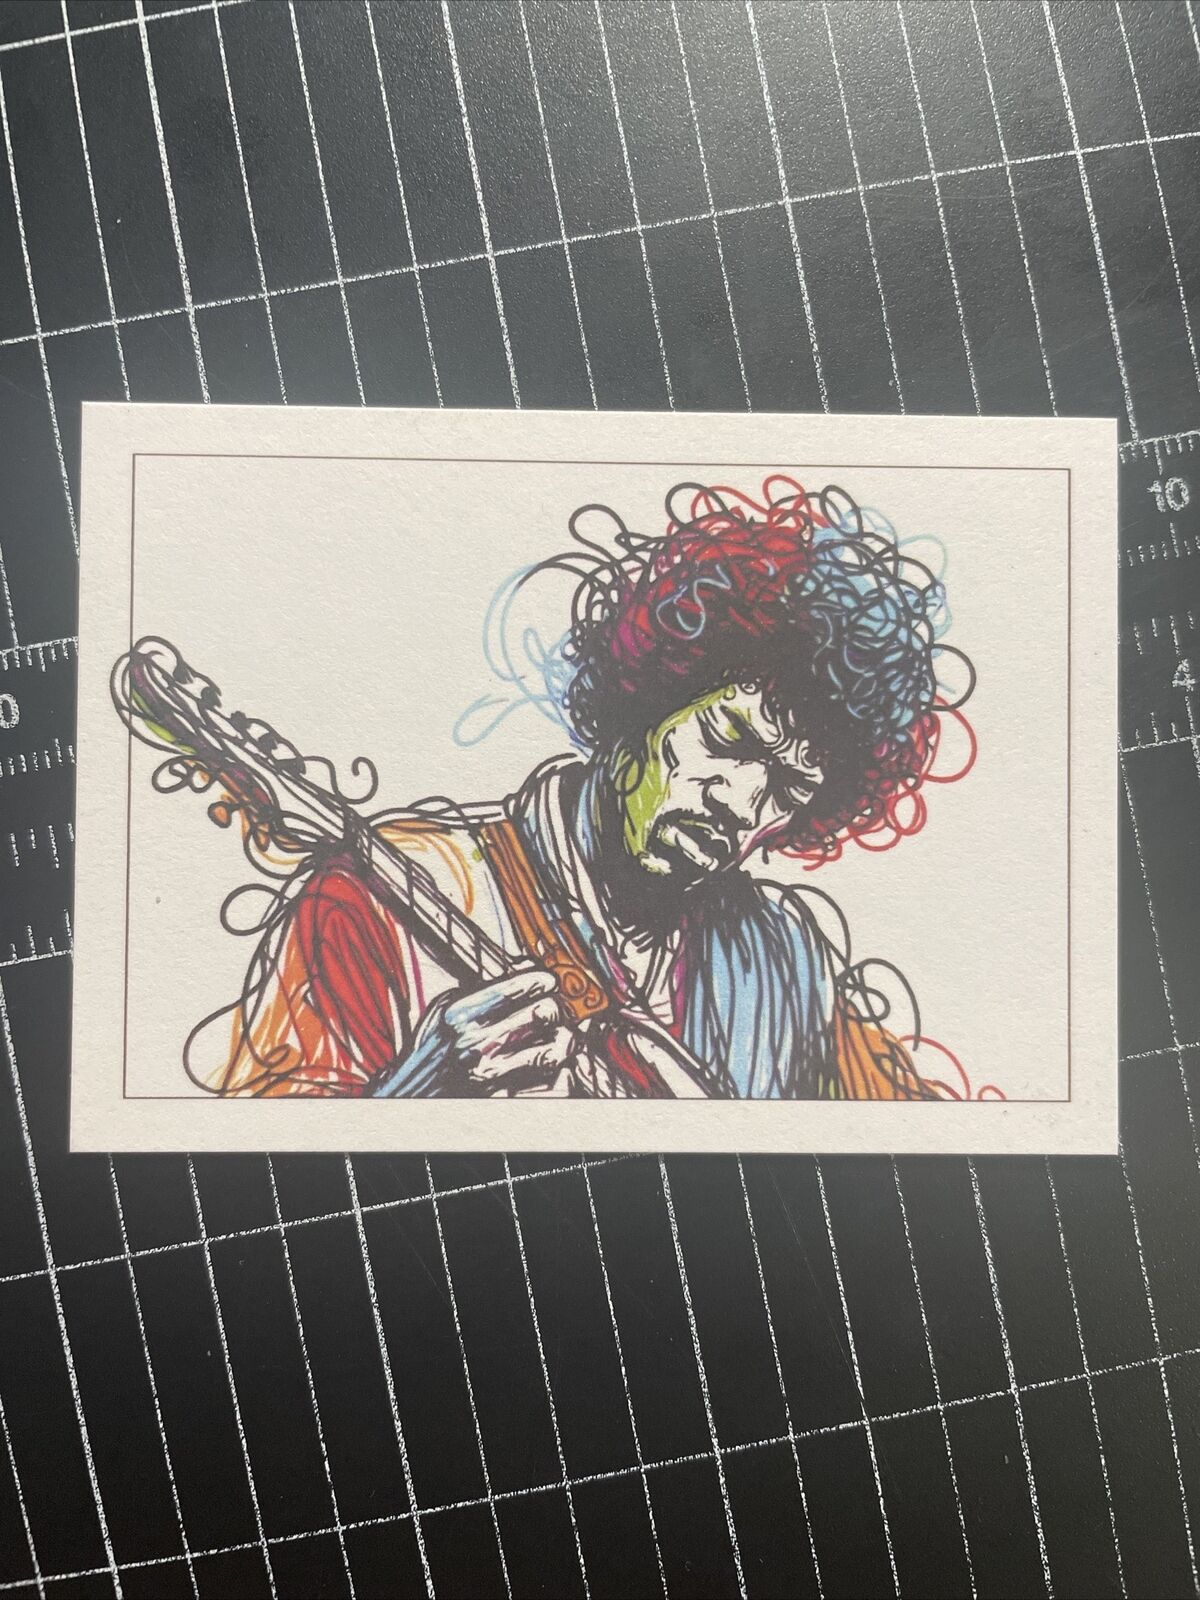 Jimi Hendrix Original Art Trading Card Signed By Artist On Back